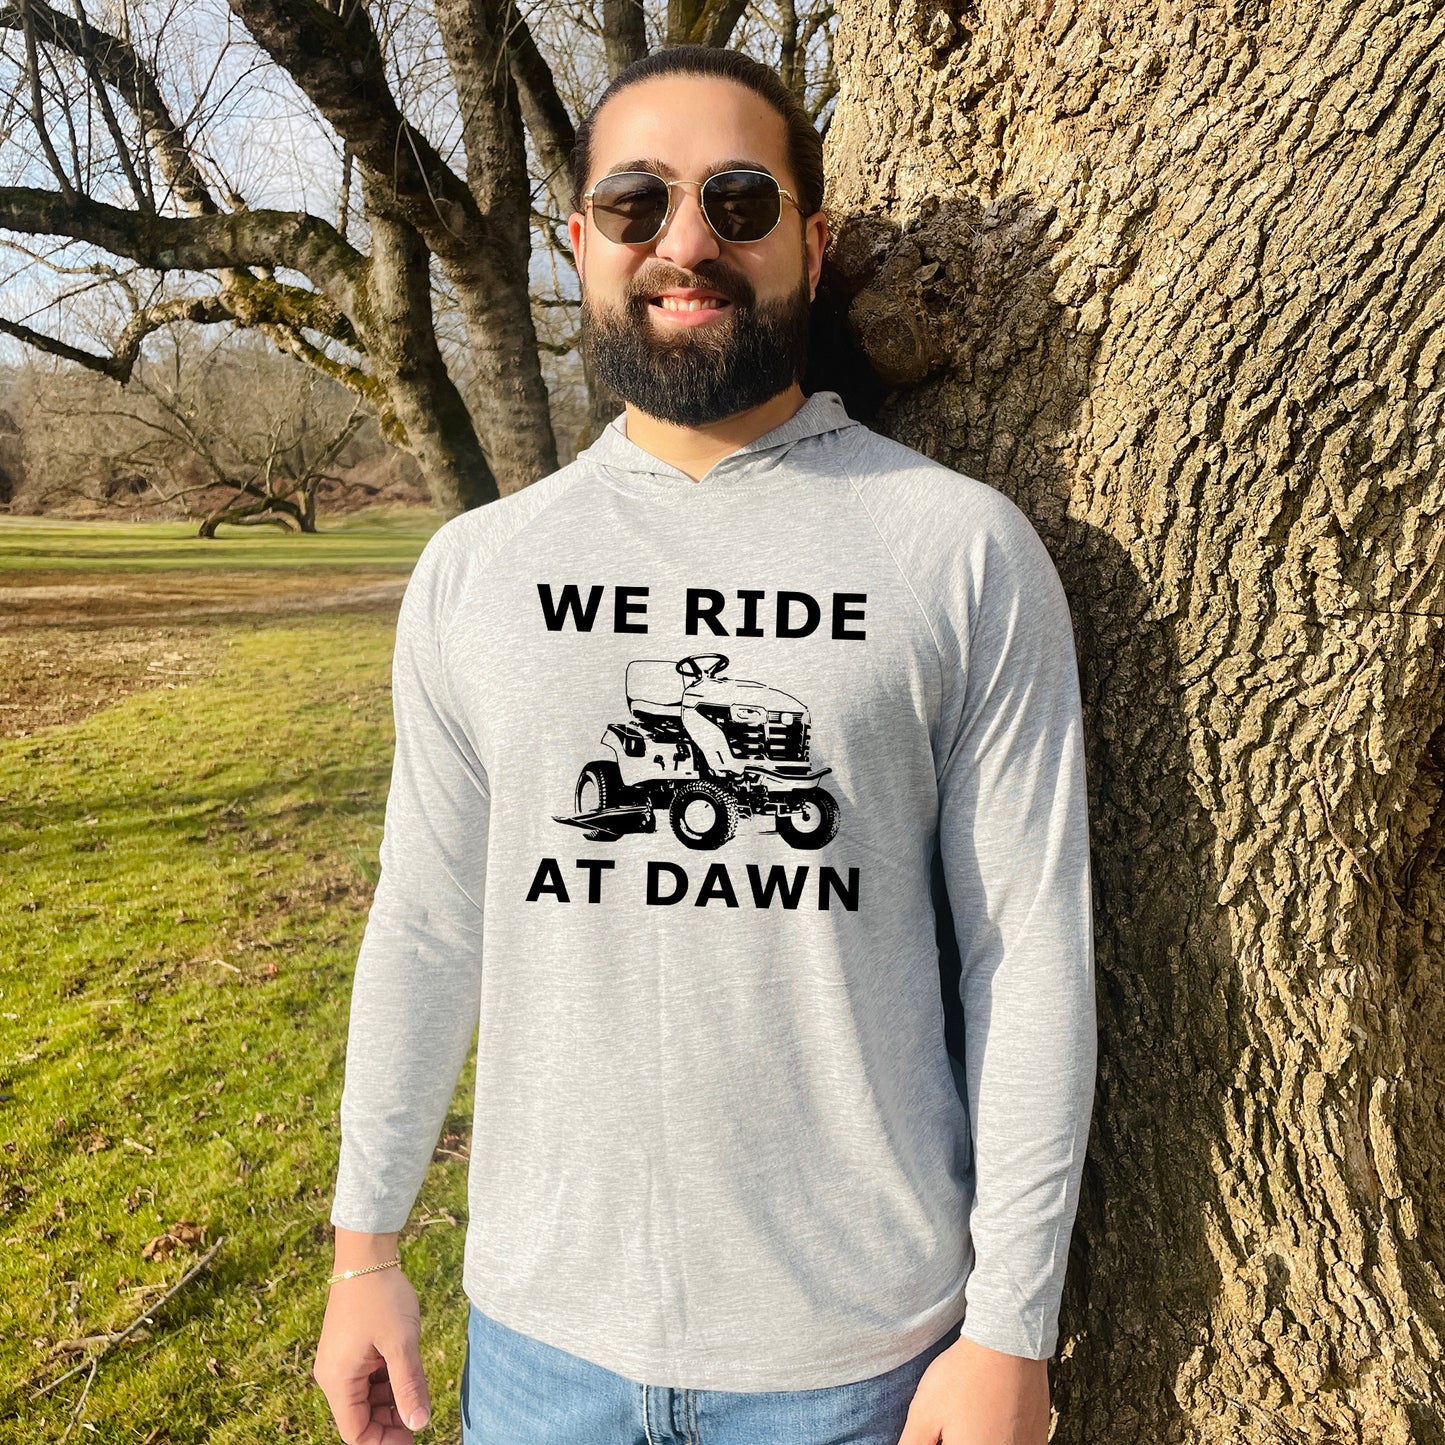 We Ride At Dawn - Unisex T-Shirt Hoodie - Heather Gray